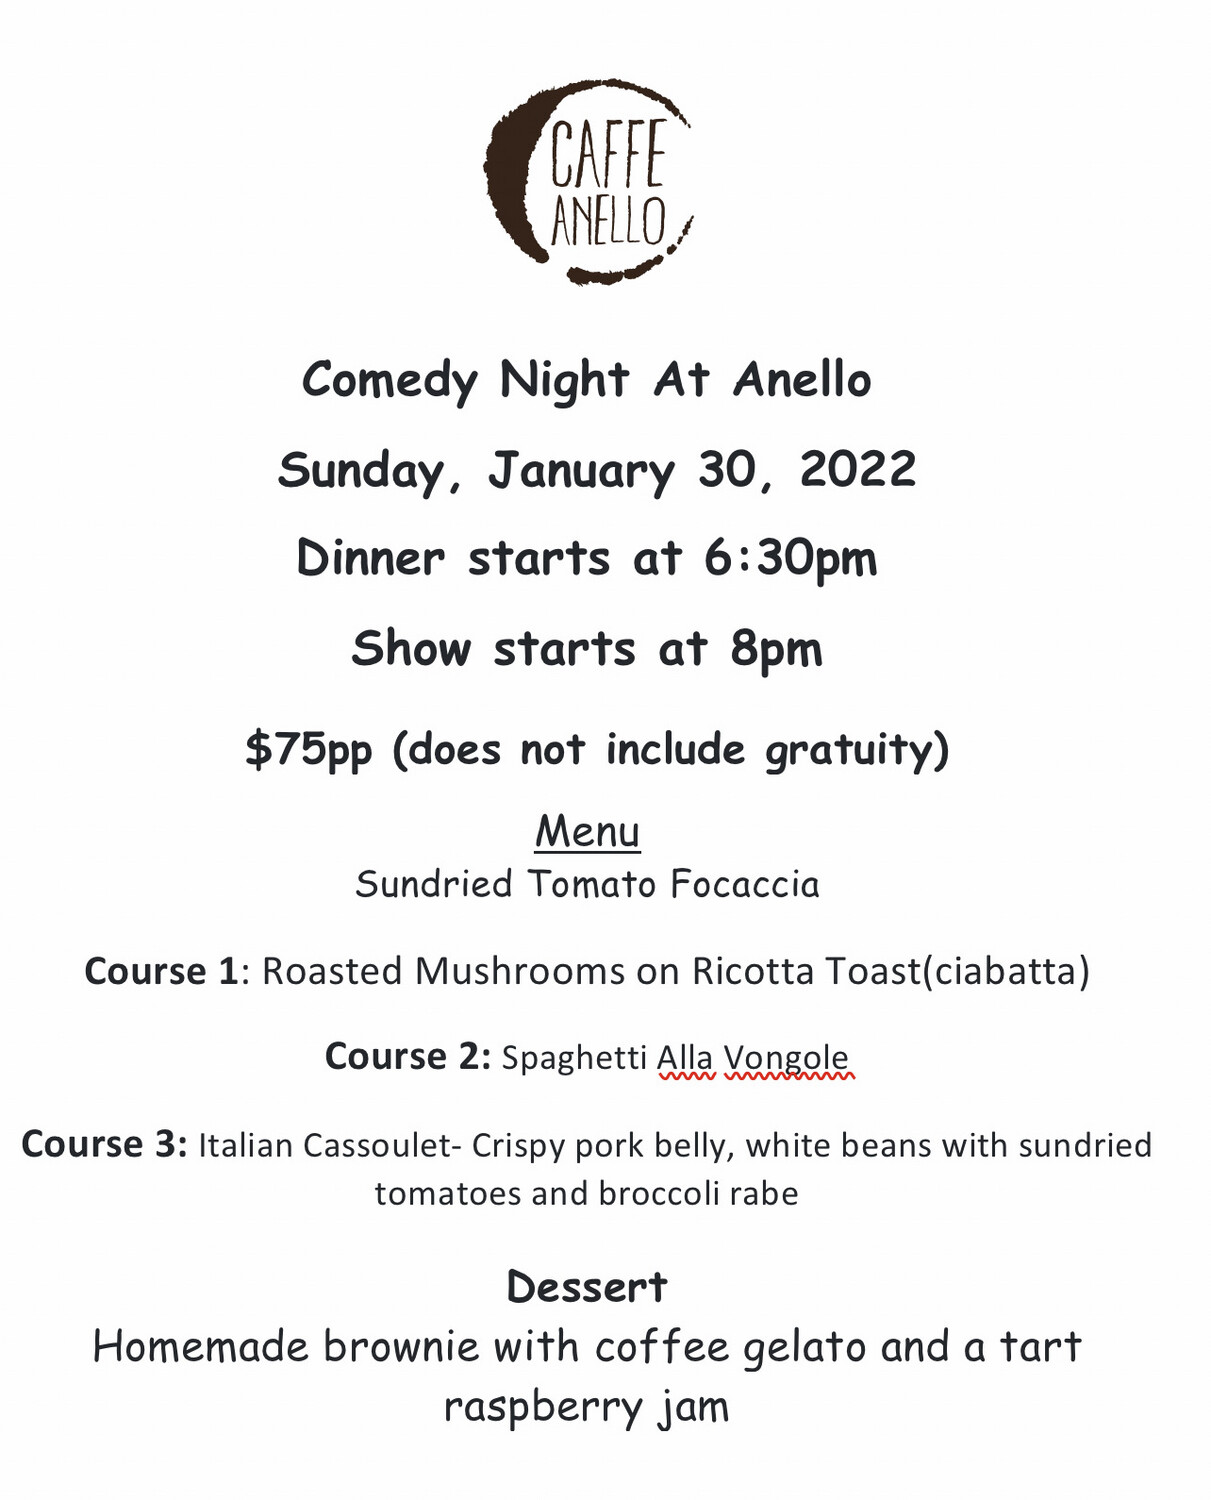 A Night Of Comedy At Anello